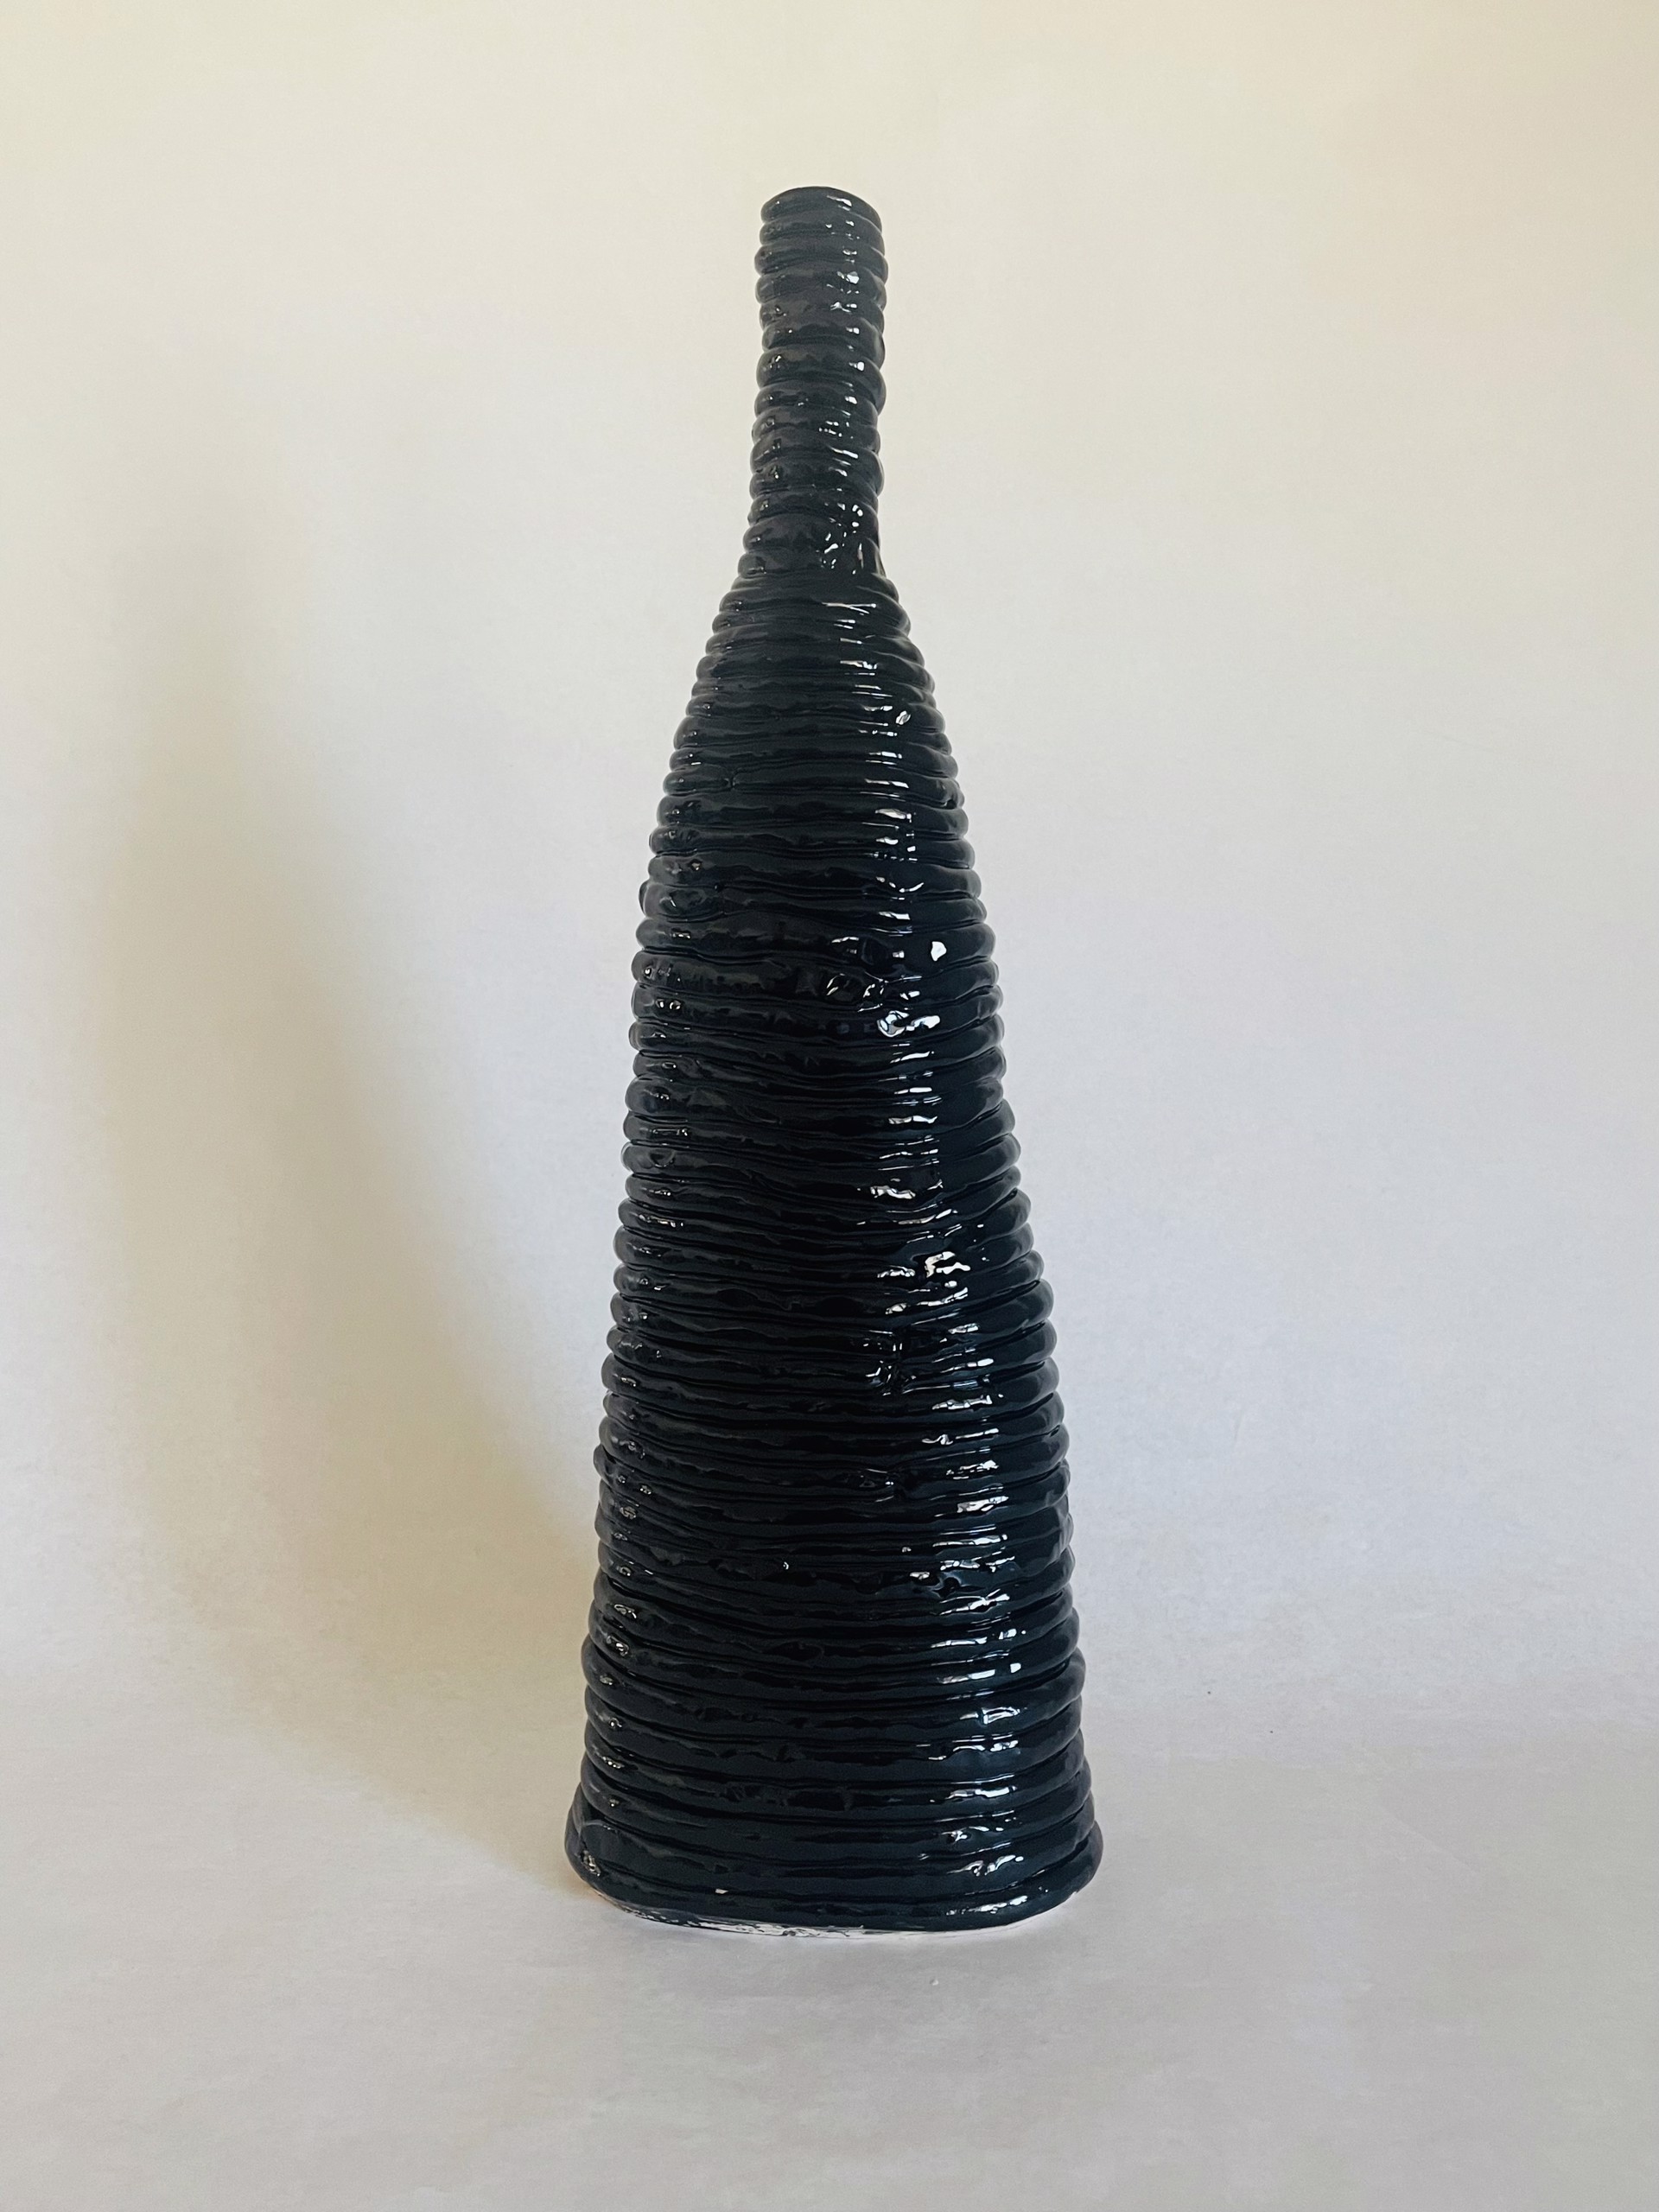 WT Black Vase 5 by Sarah Hummel Jones